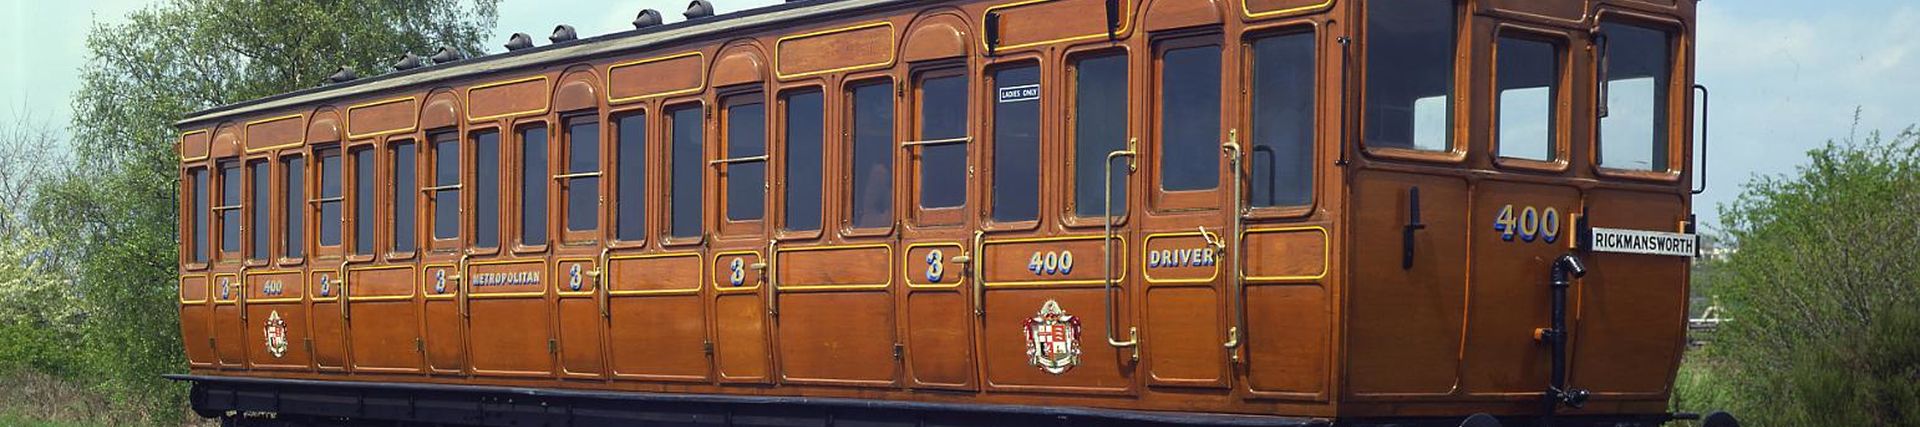 Metropolitan Railway Bogie Stock coach No 400, 1900